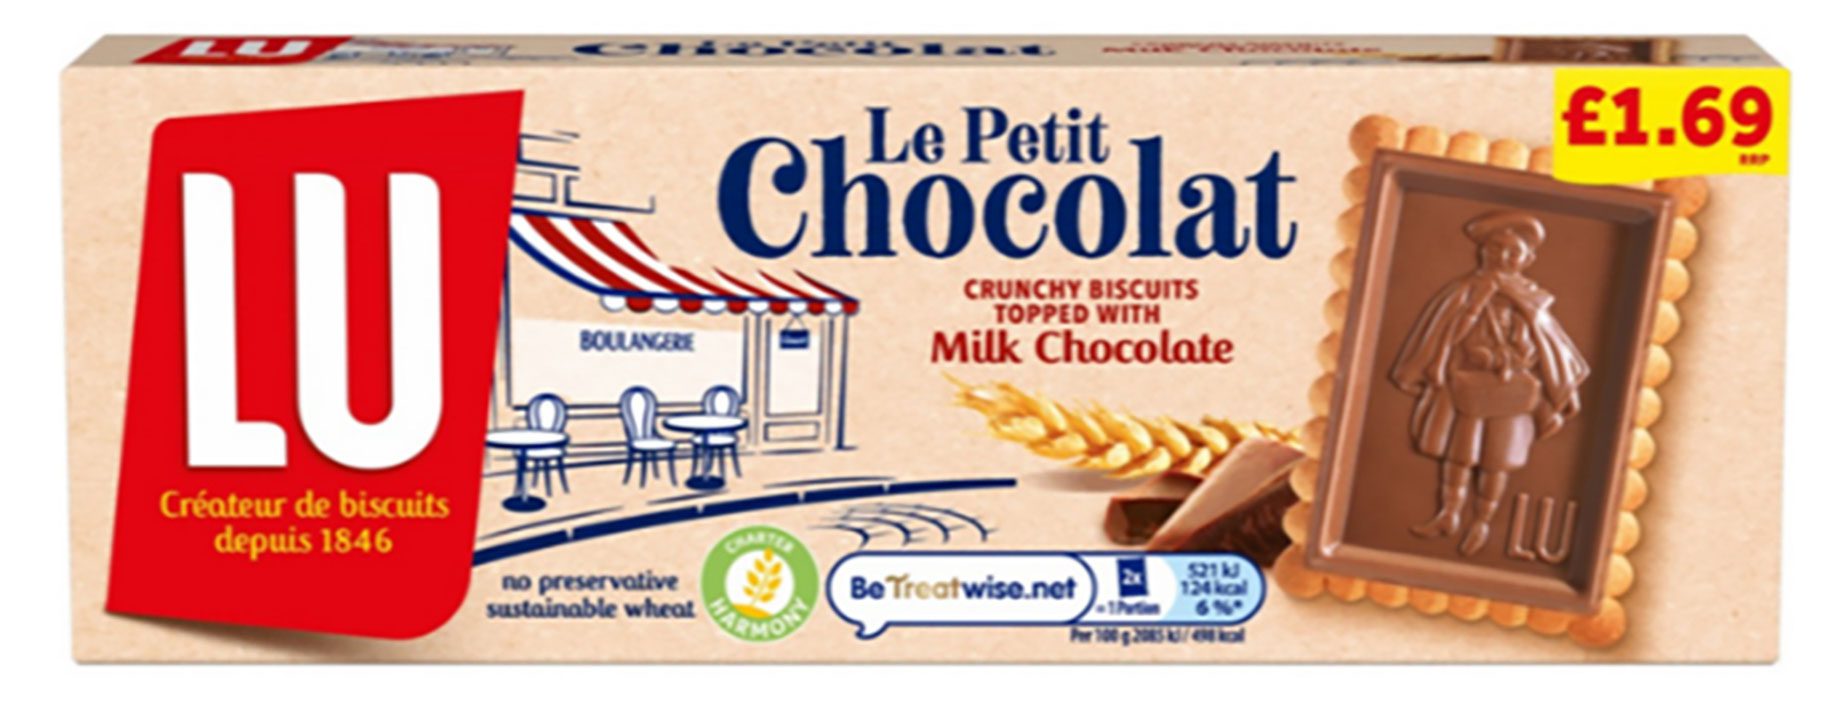 The new LU Le Petit Chocolat PMP.